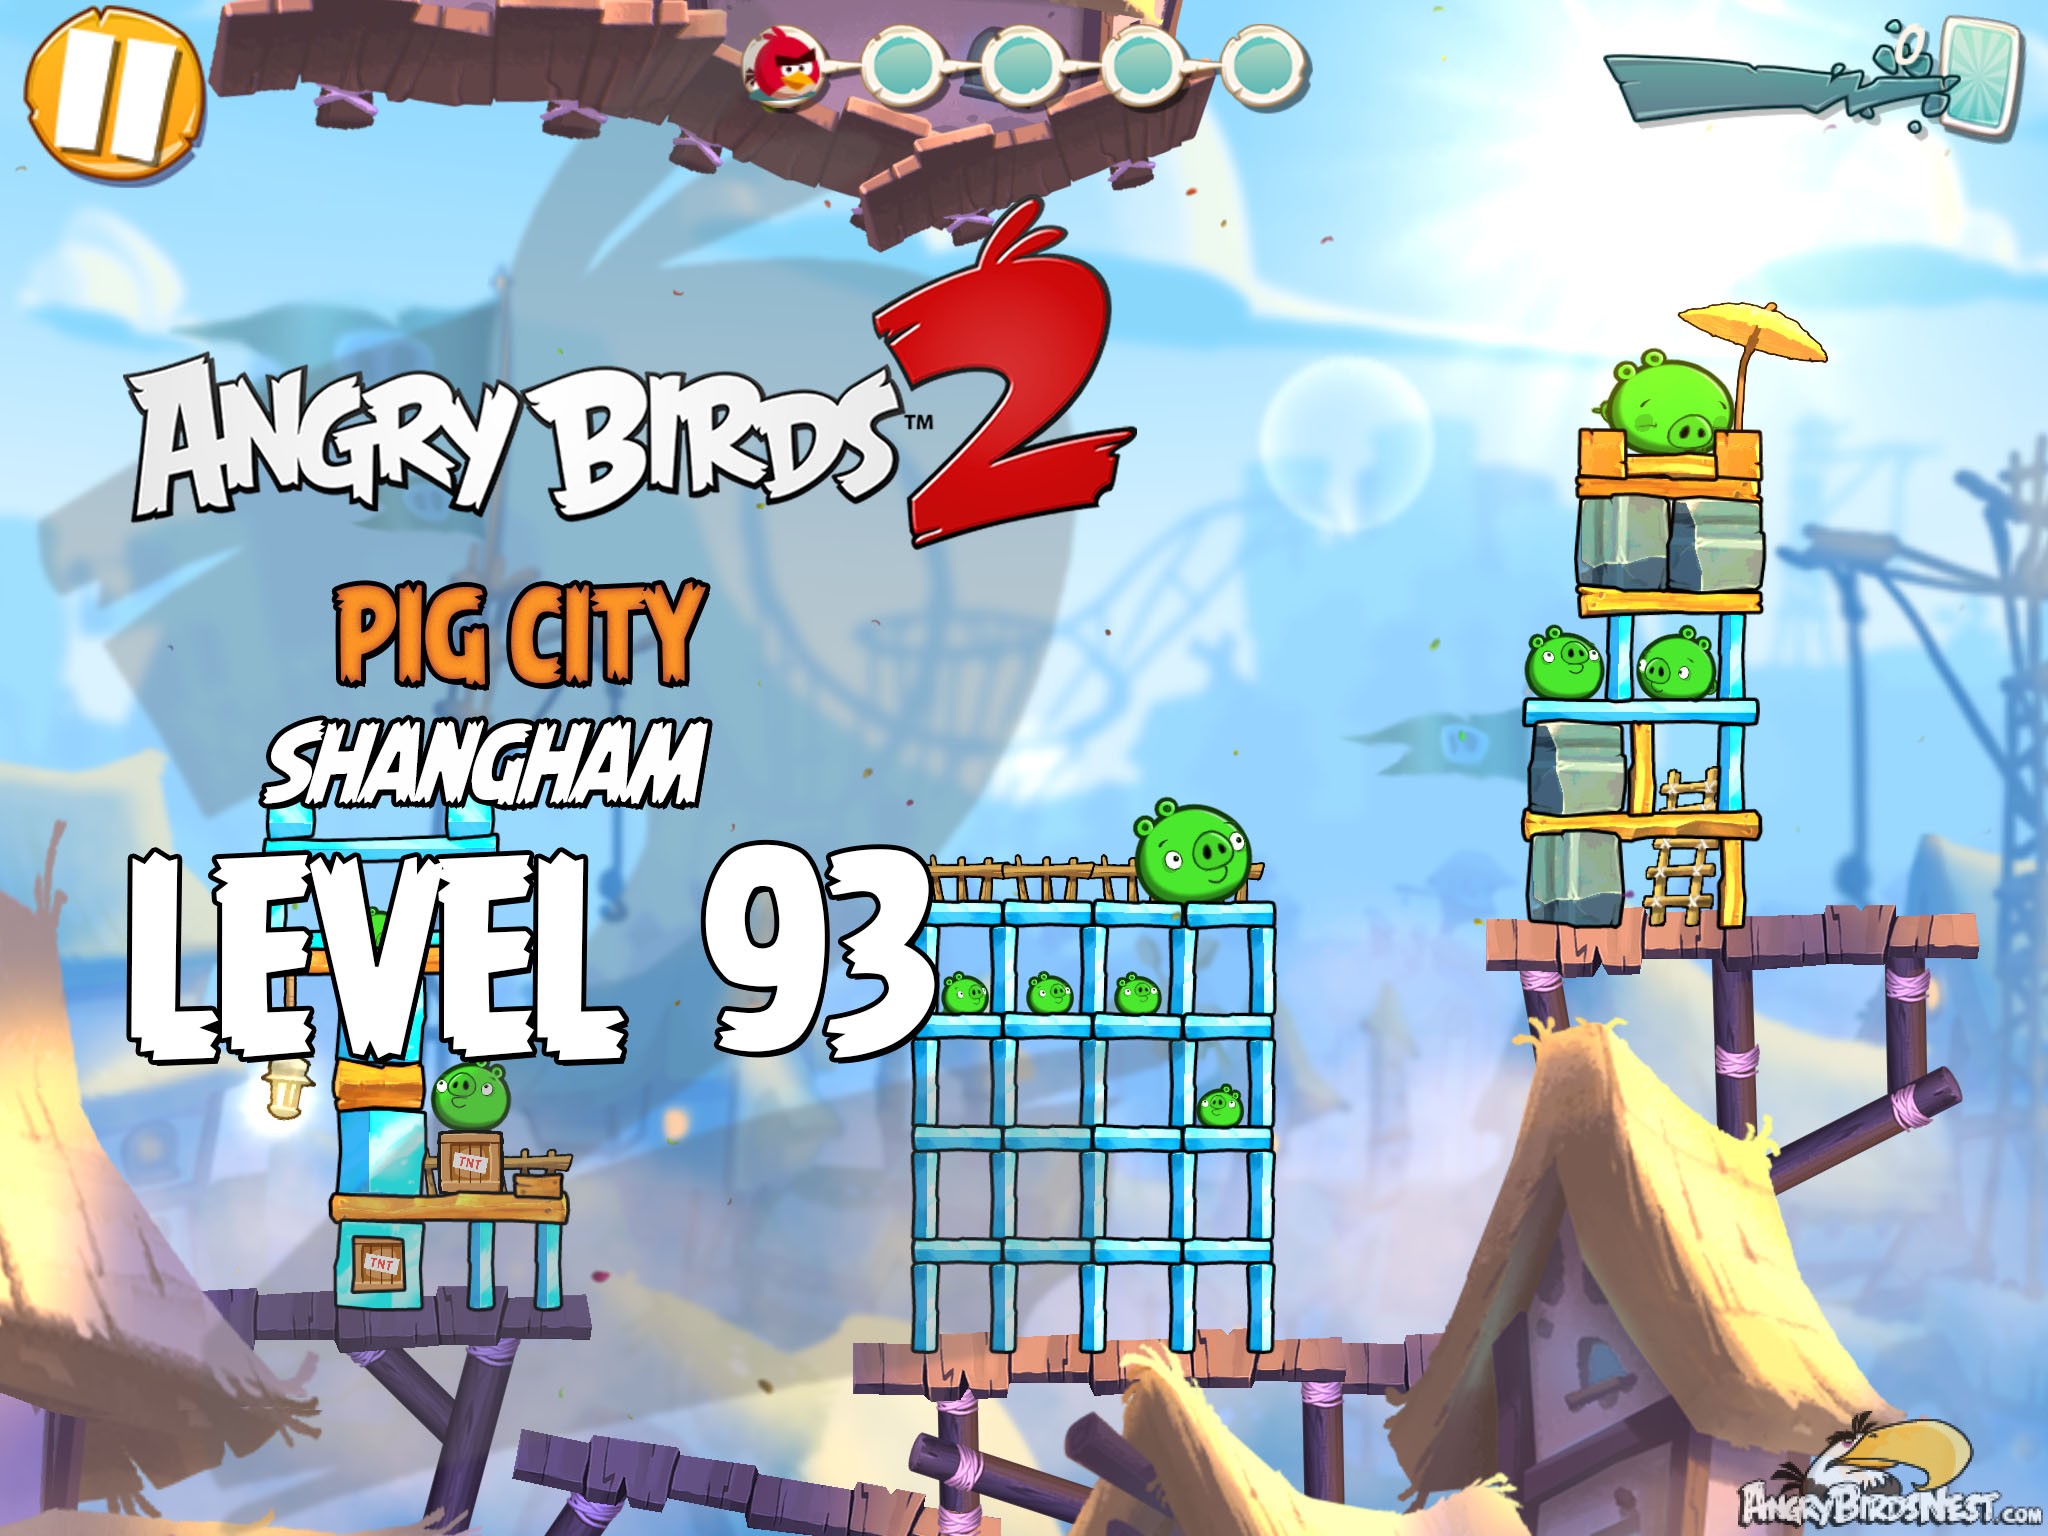 Angry Birds 2 Pig City Shangham Level 93